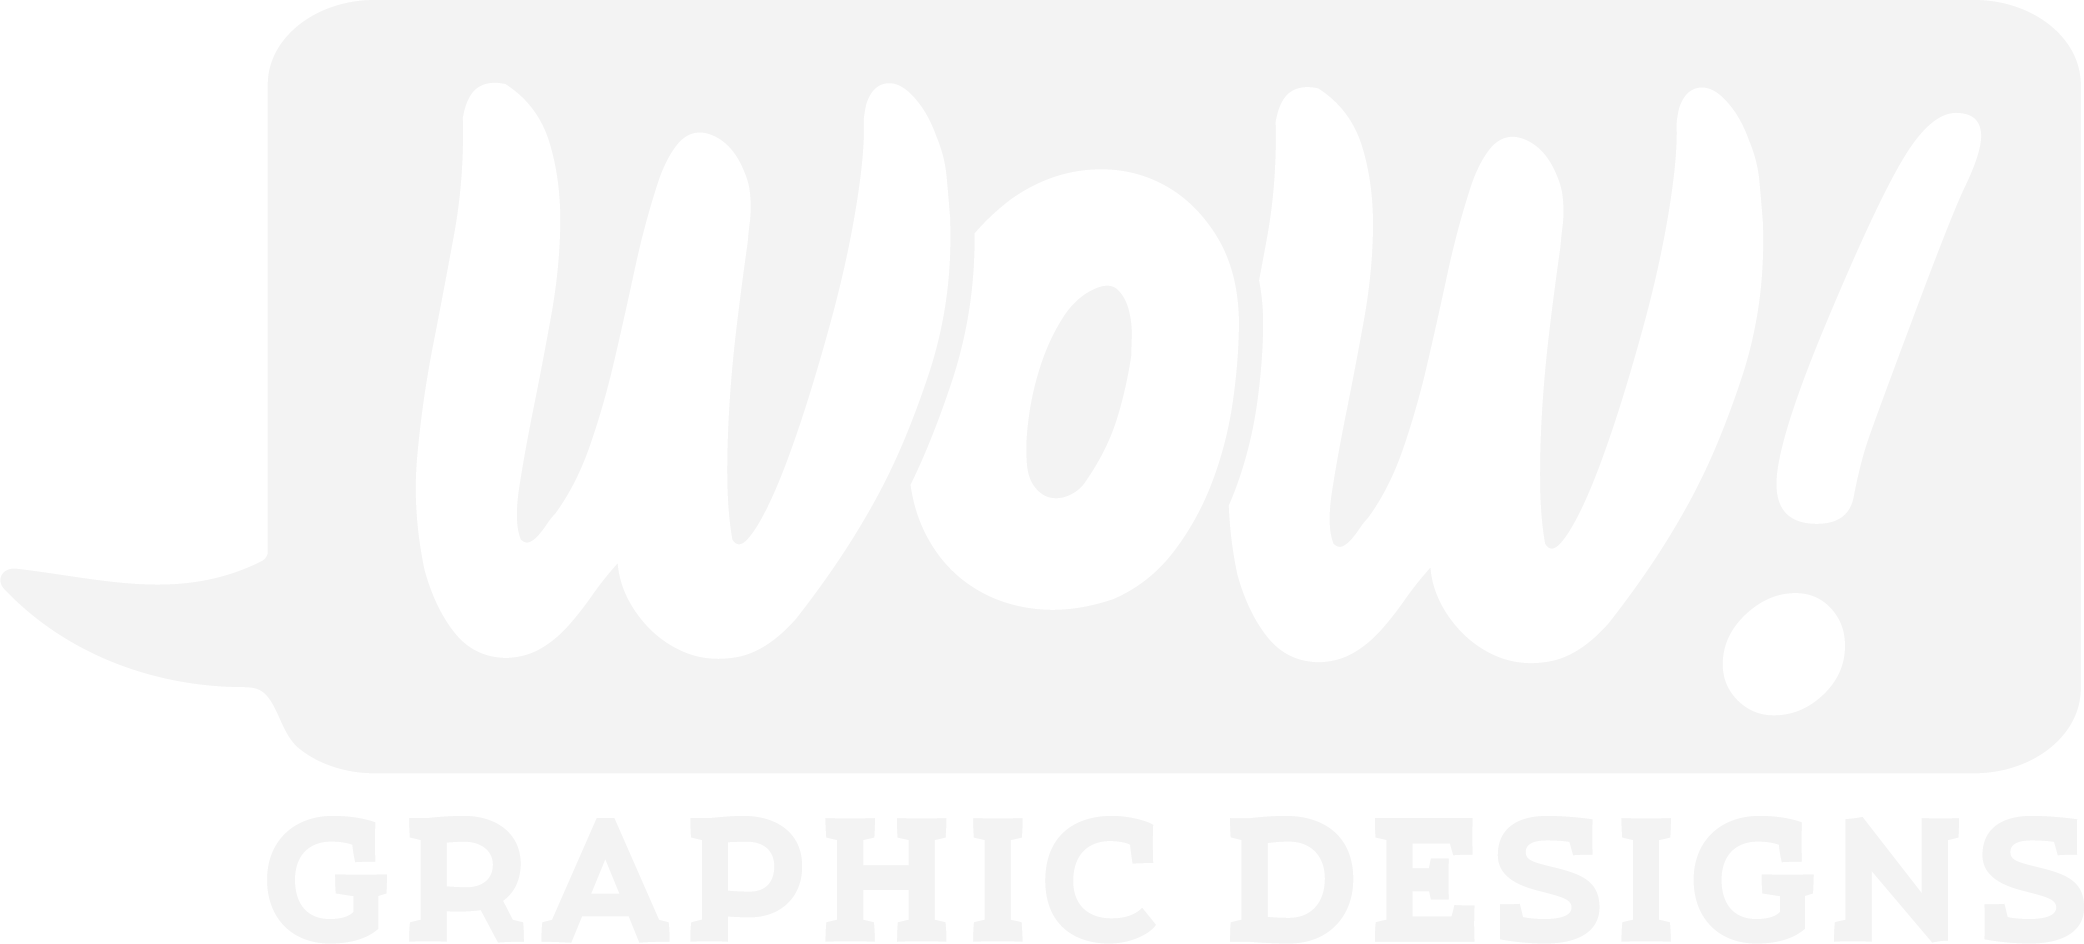 White WoW! Graphic Designs logo